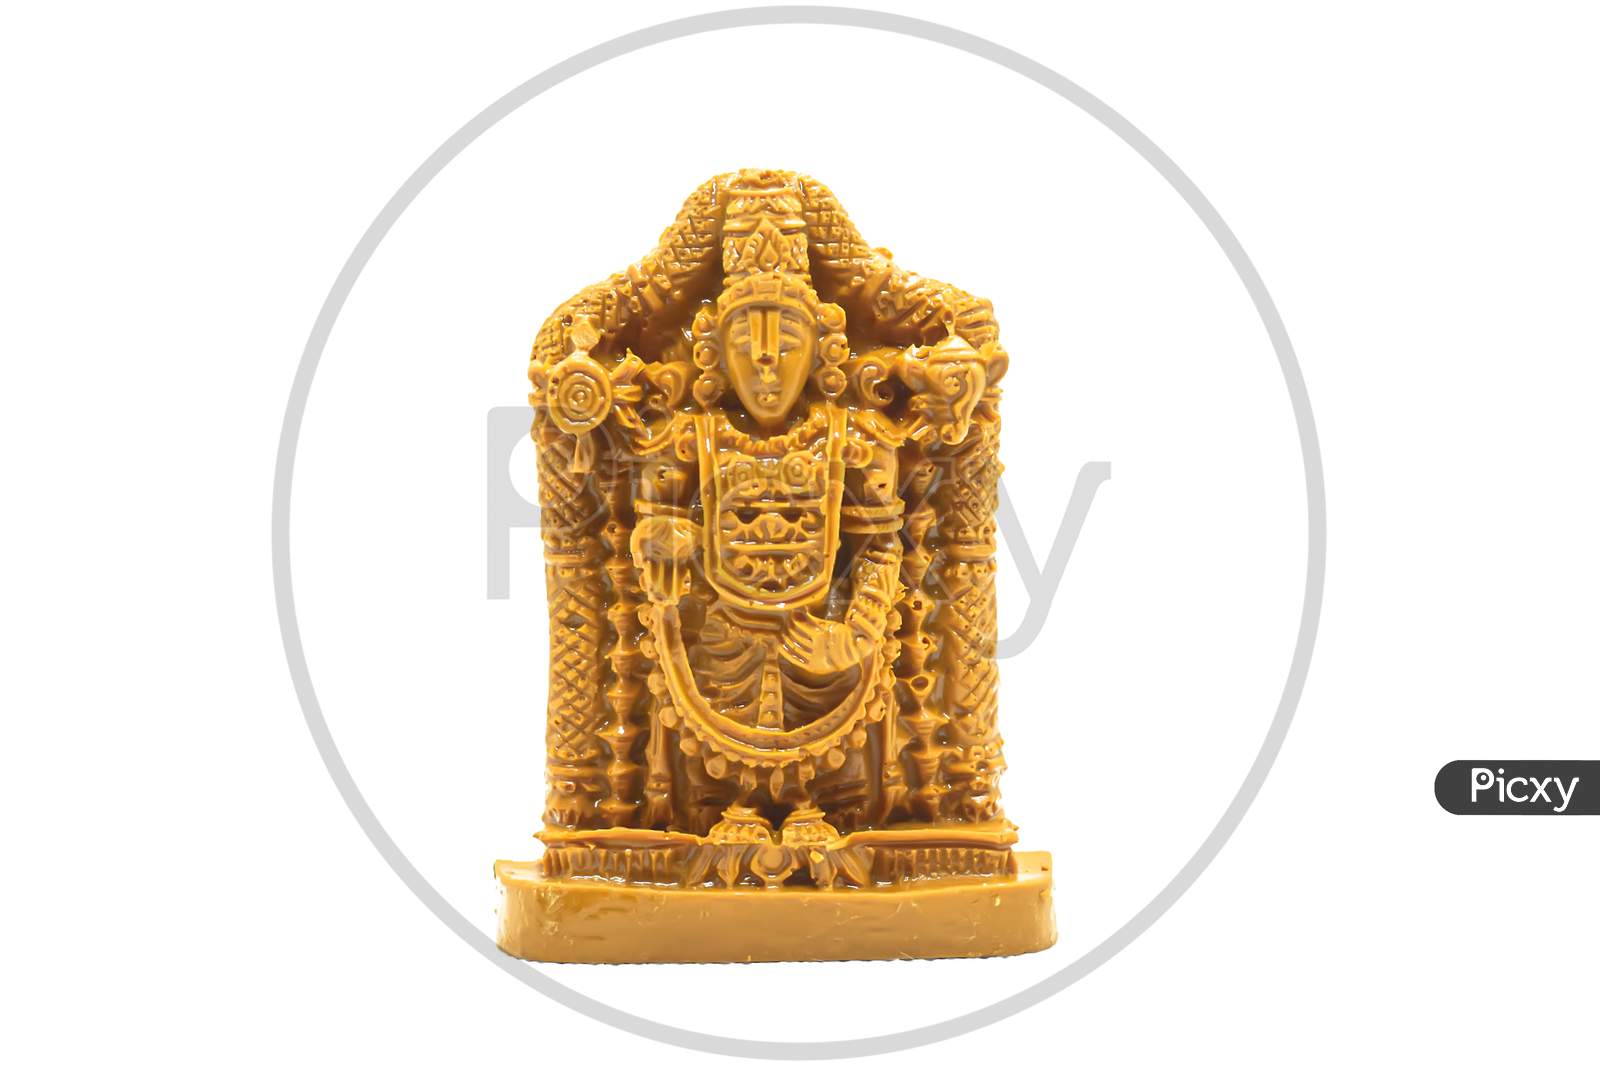 Wooden Tirupati Venkateswara Swamy Statue Home Decoration And Prayer Room